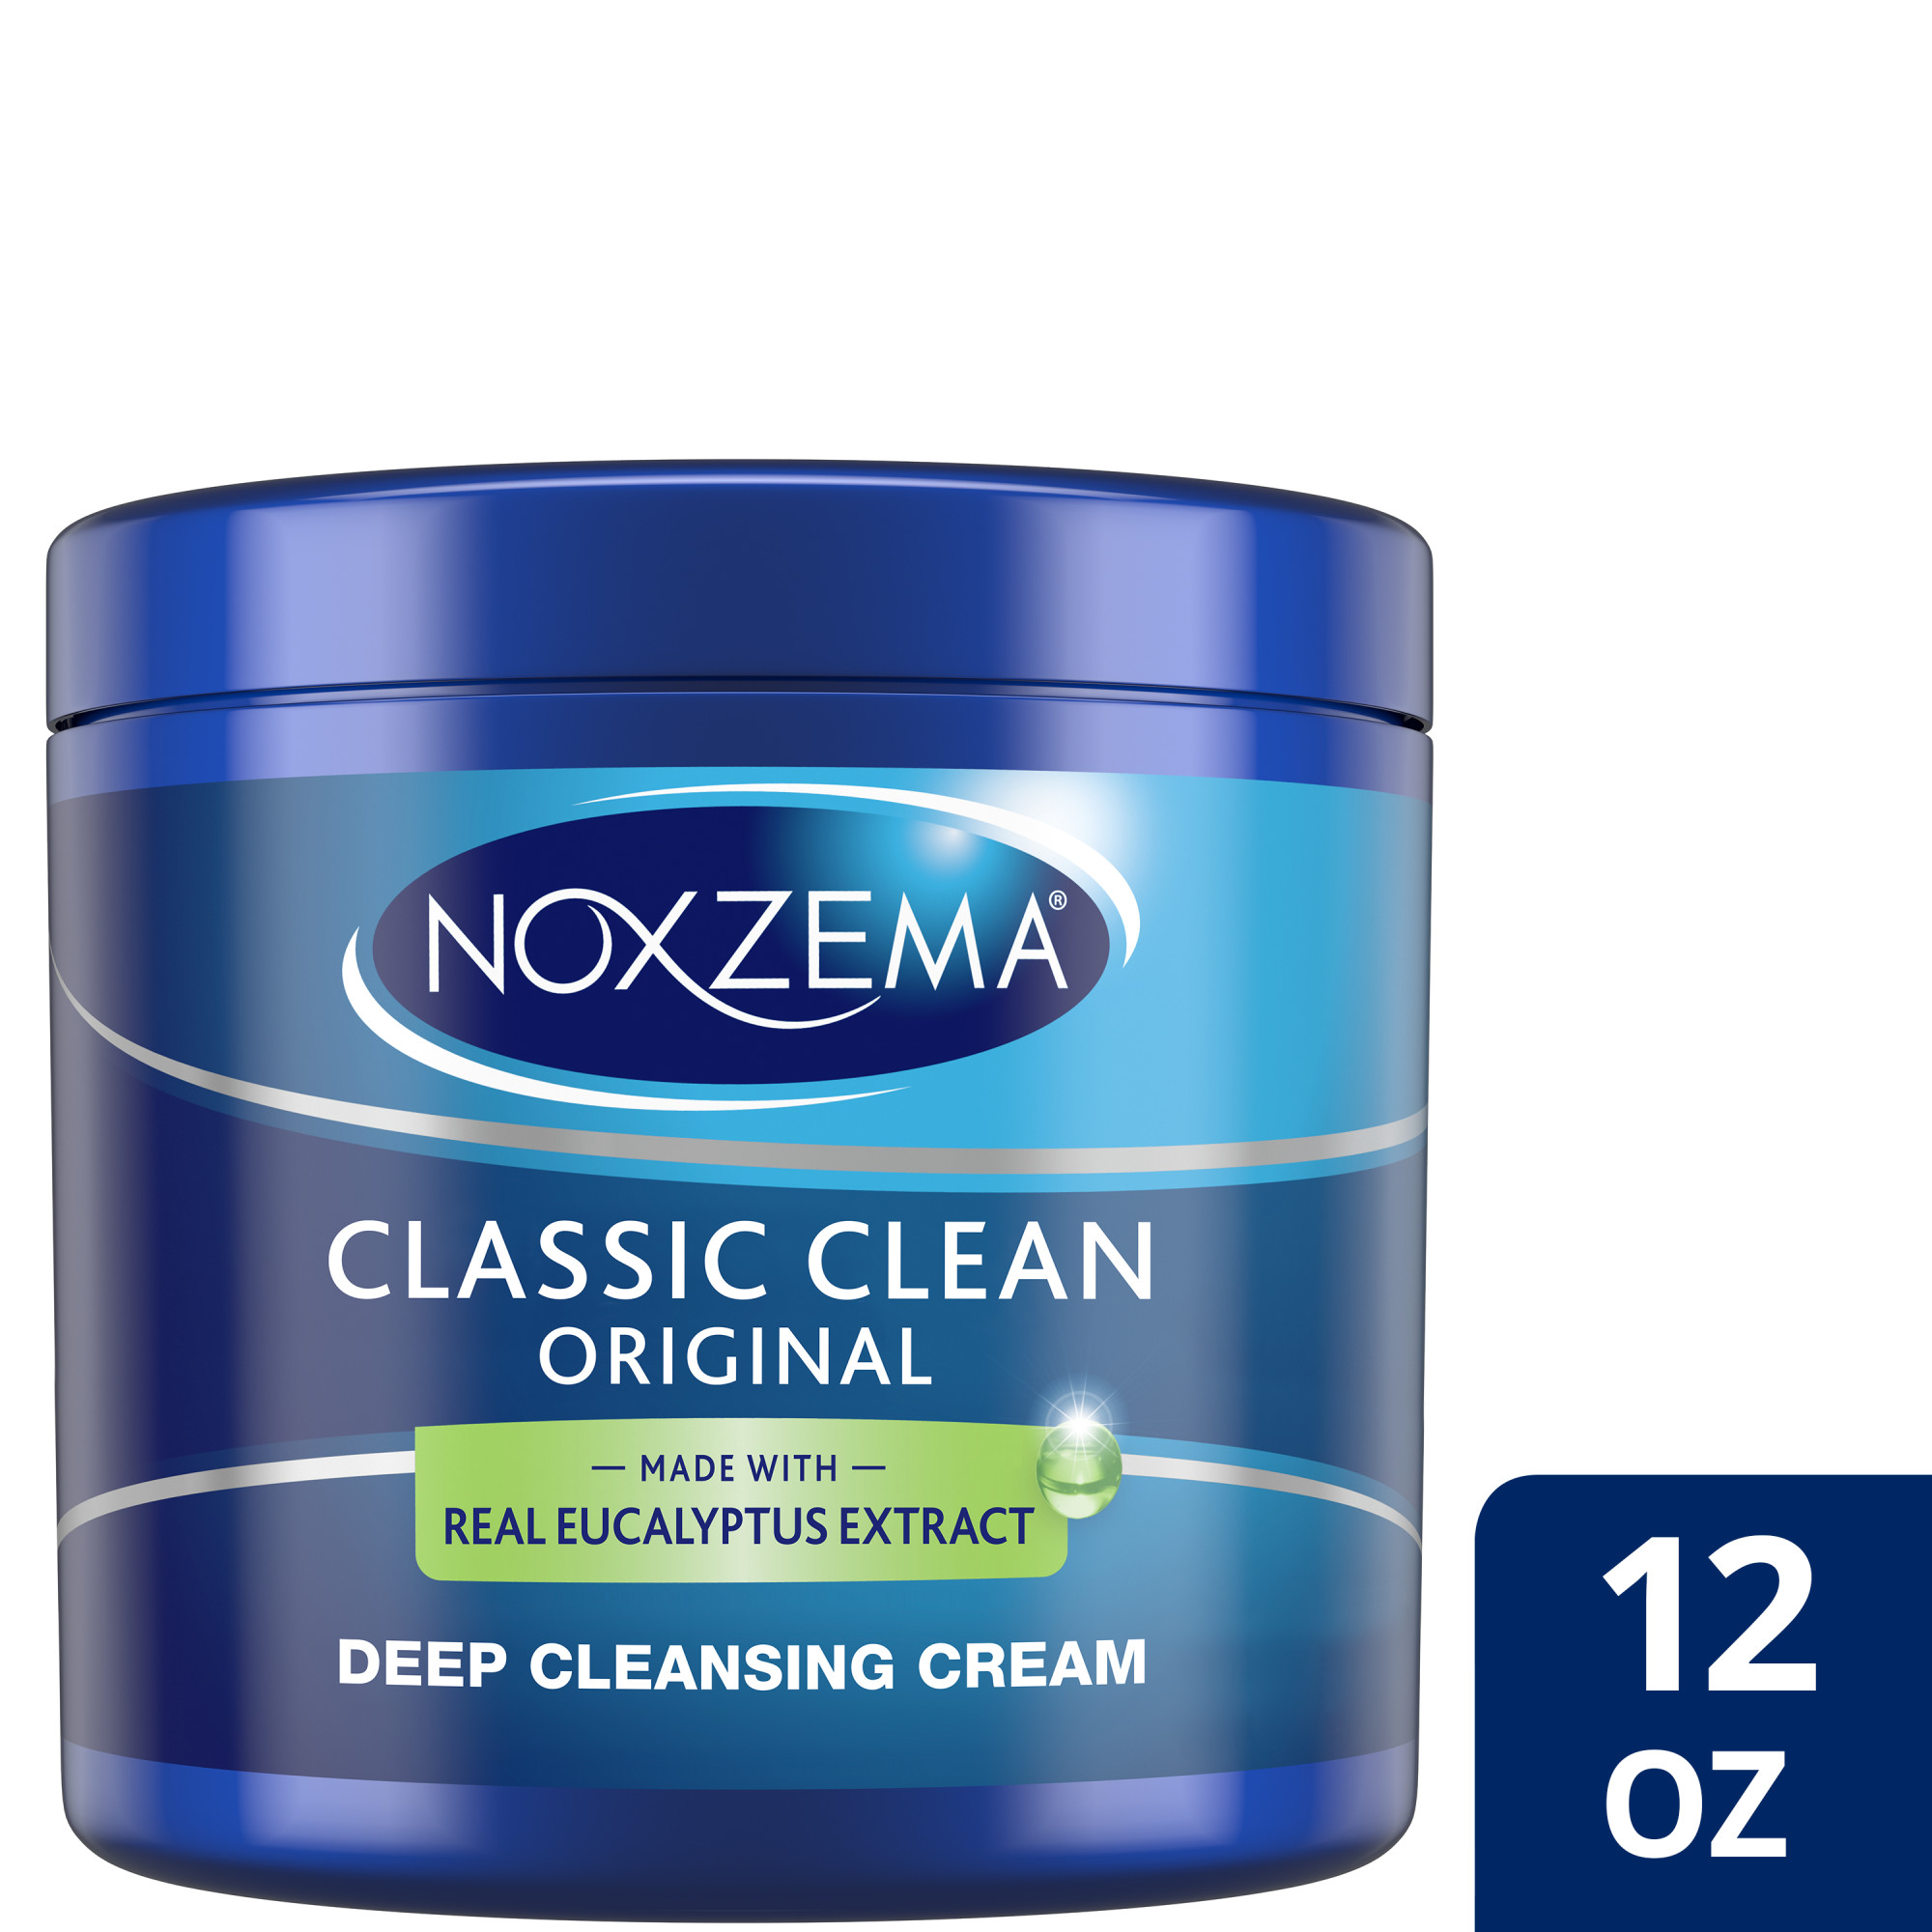 Noxzema Classic Clean Cleanser Original Deep Cleansing Cream, 12 oz - image 1 of 8